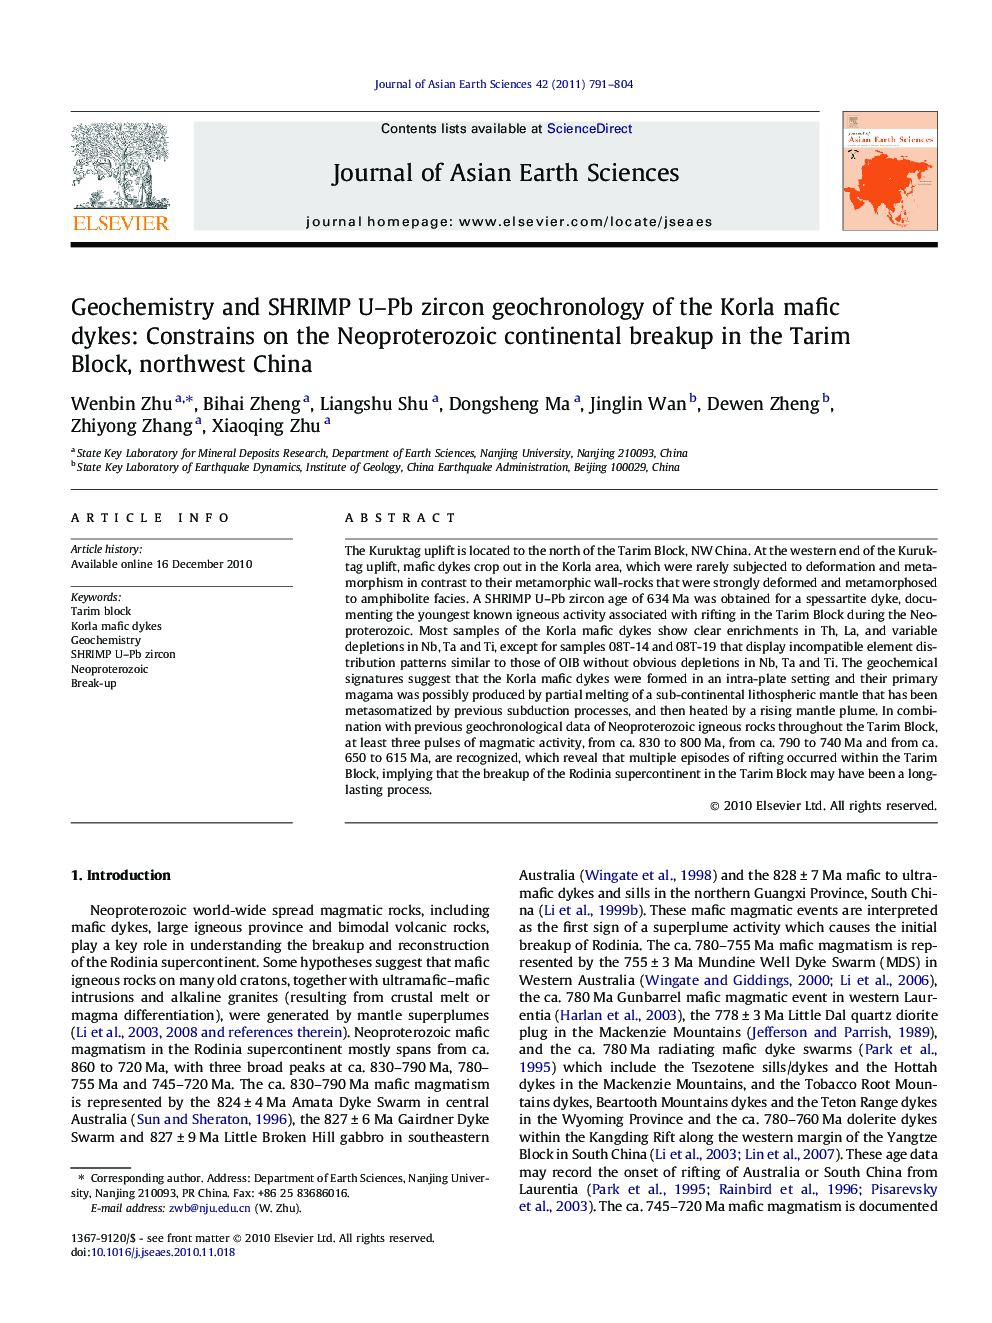 Geochemistry and SHRIMP U–Pb zircon geochronology of the Korla mafic dykes: Constrains on the Neoproterozoic continental breakup in the Tarim Block, northwest China